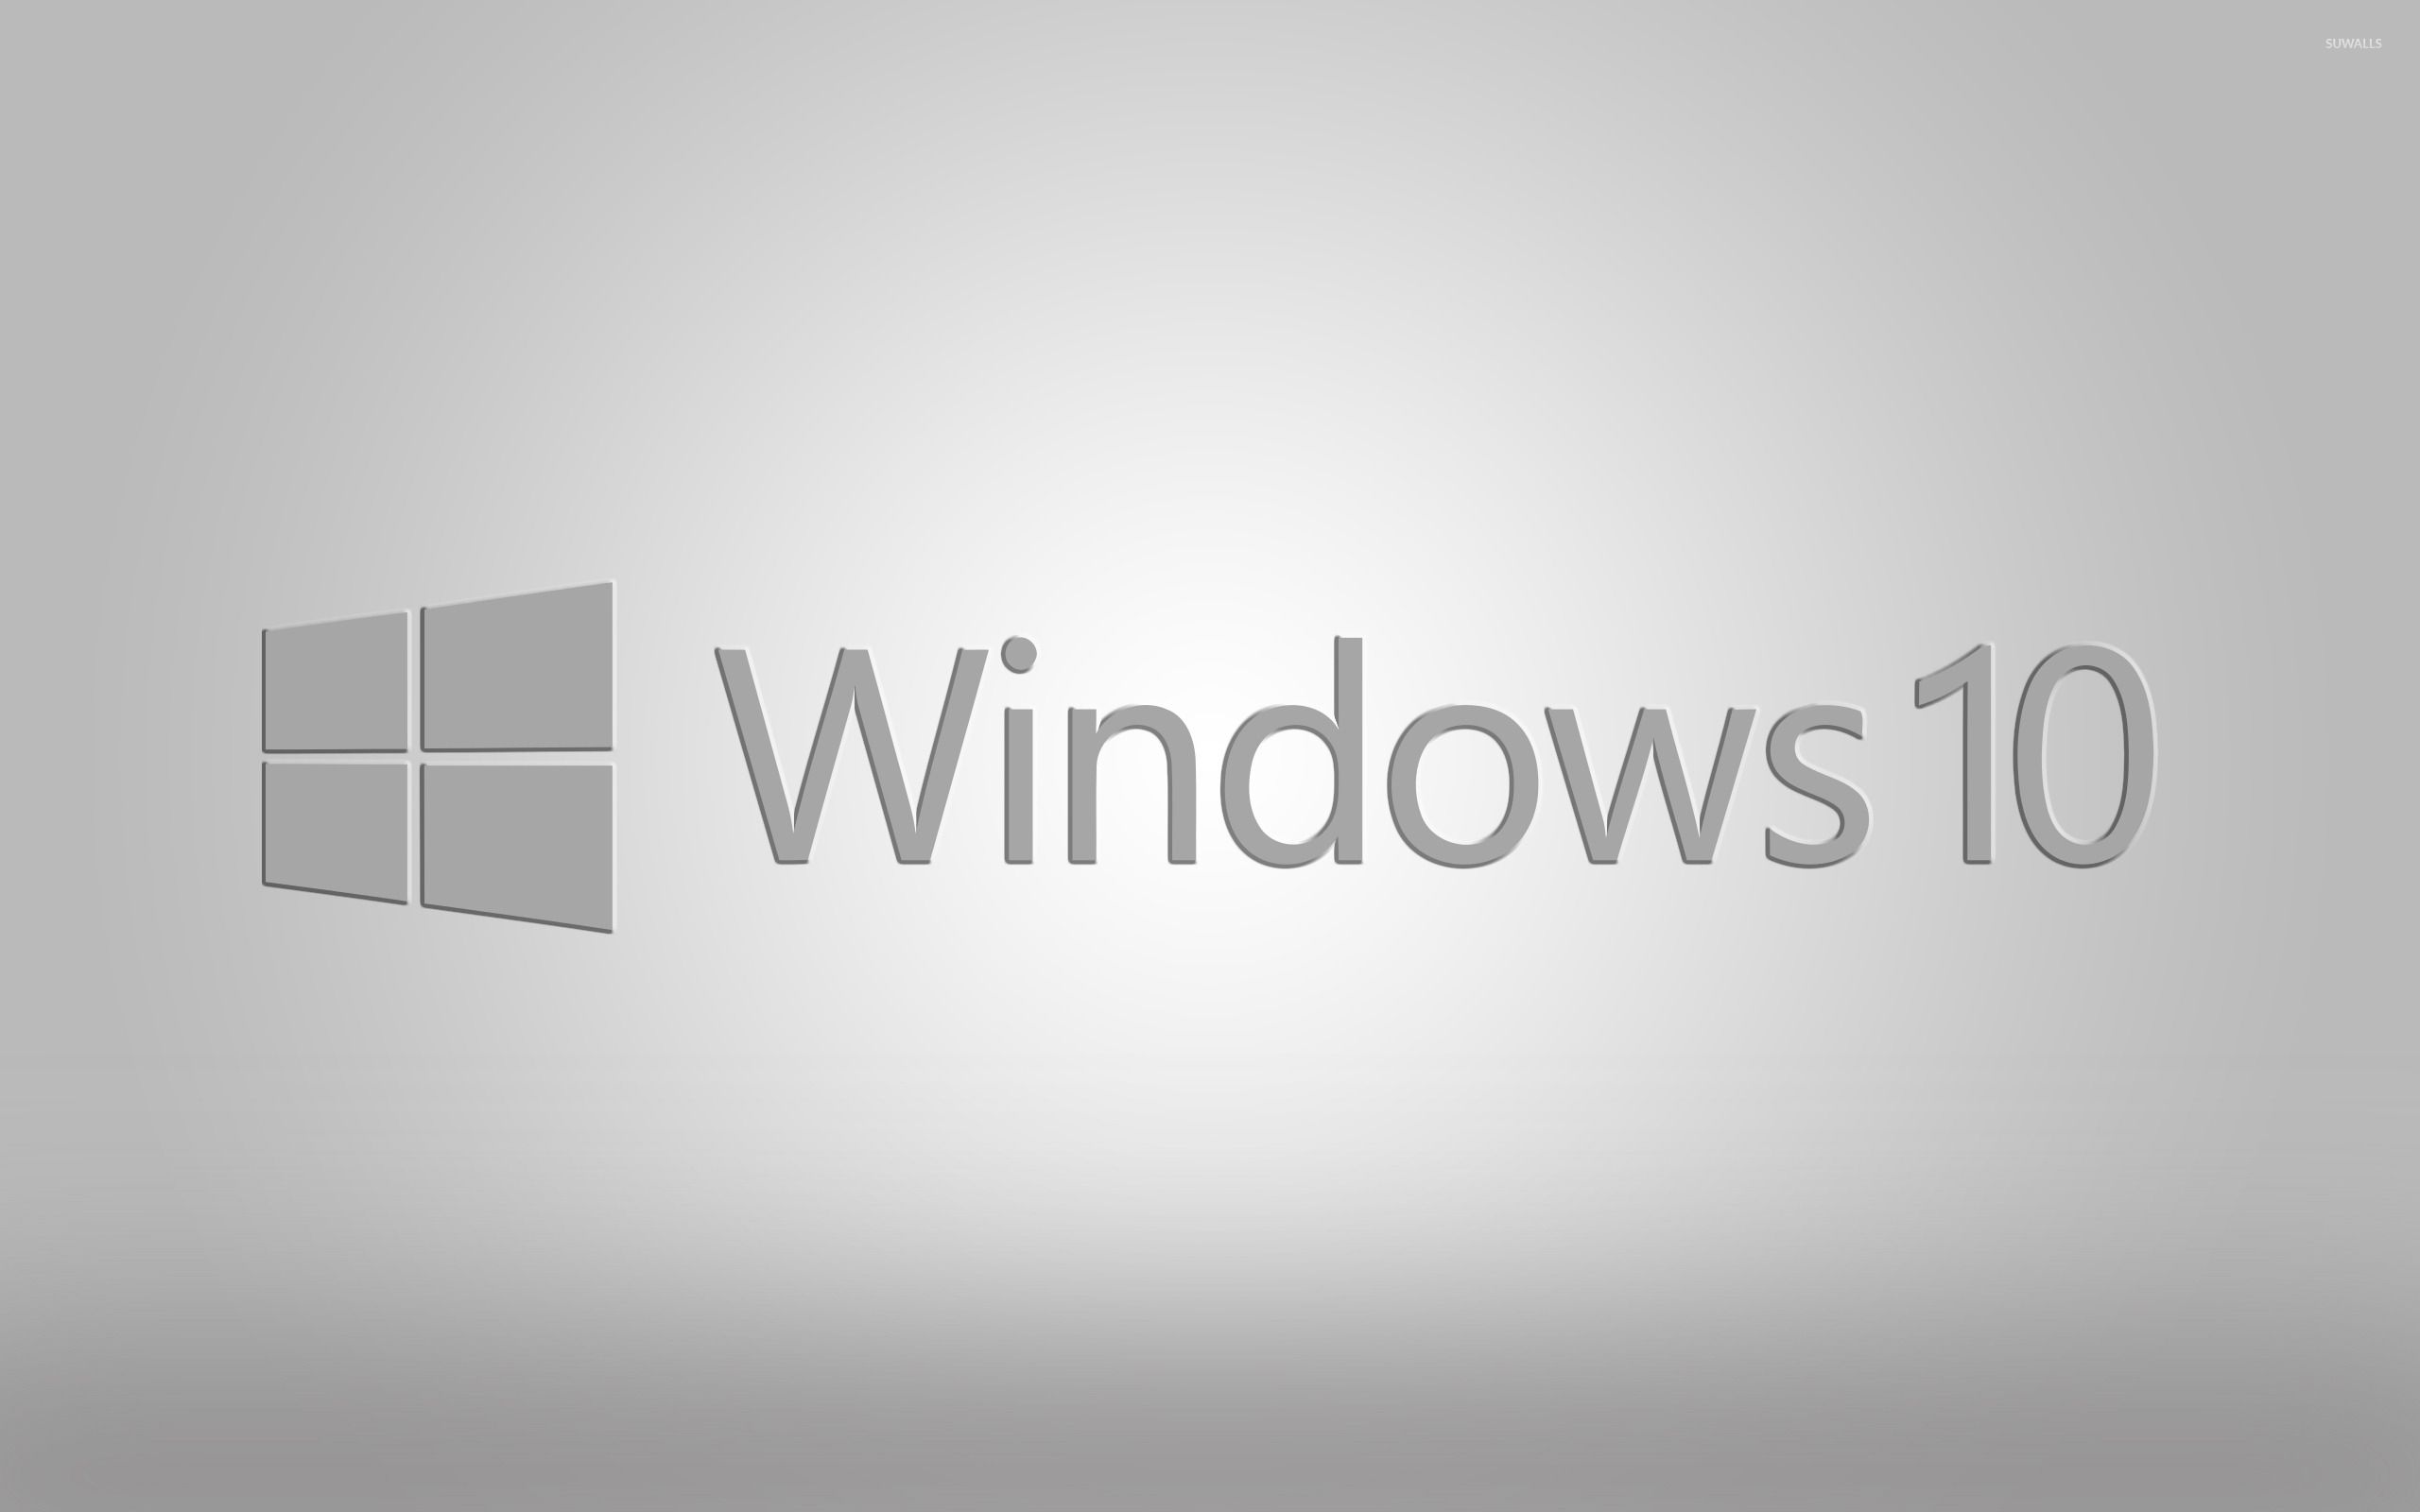 Windows 10 gray text logo on gray gradient wallpaper